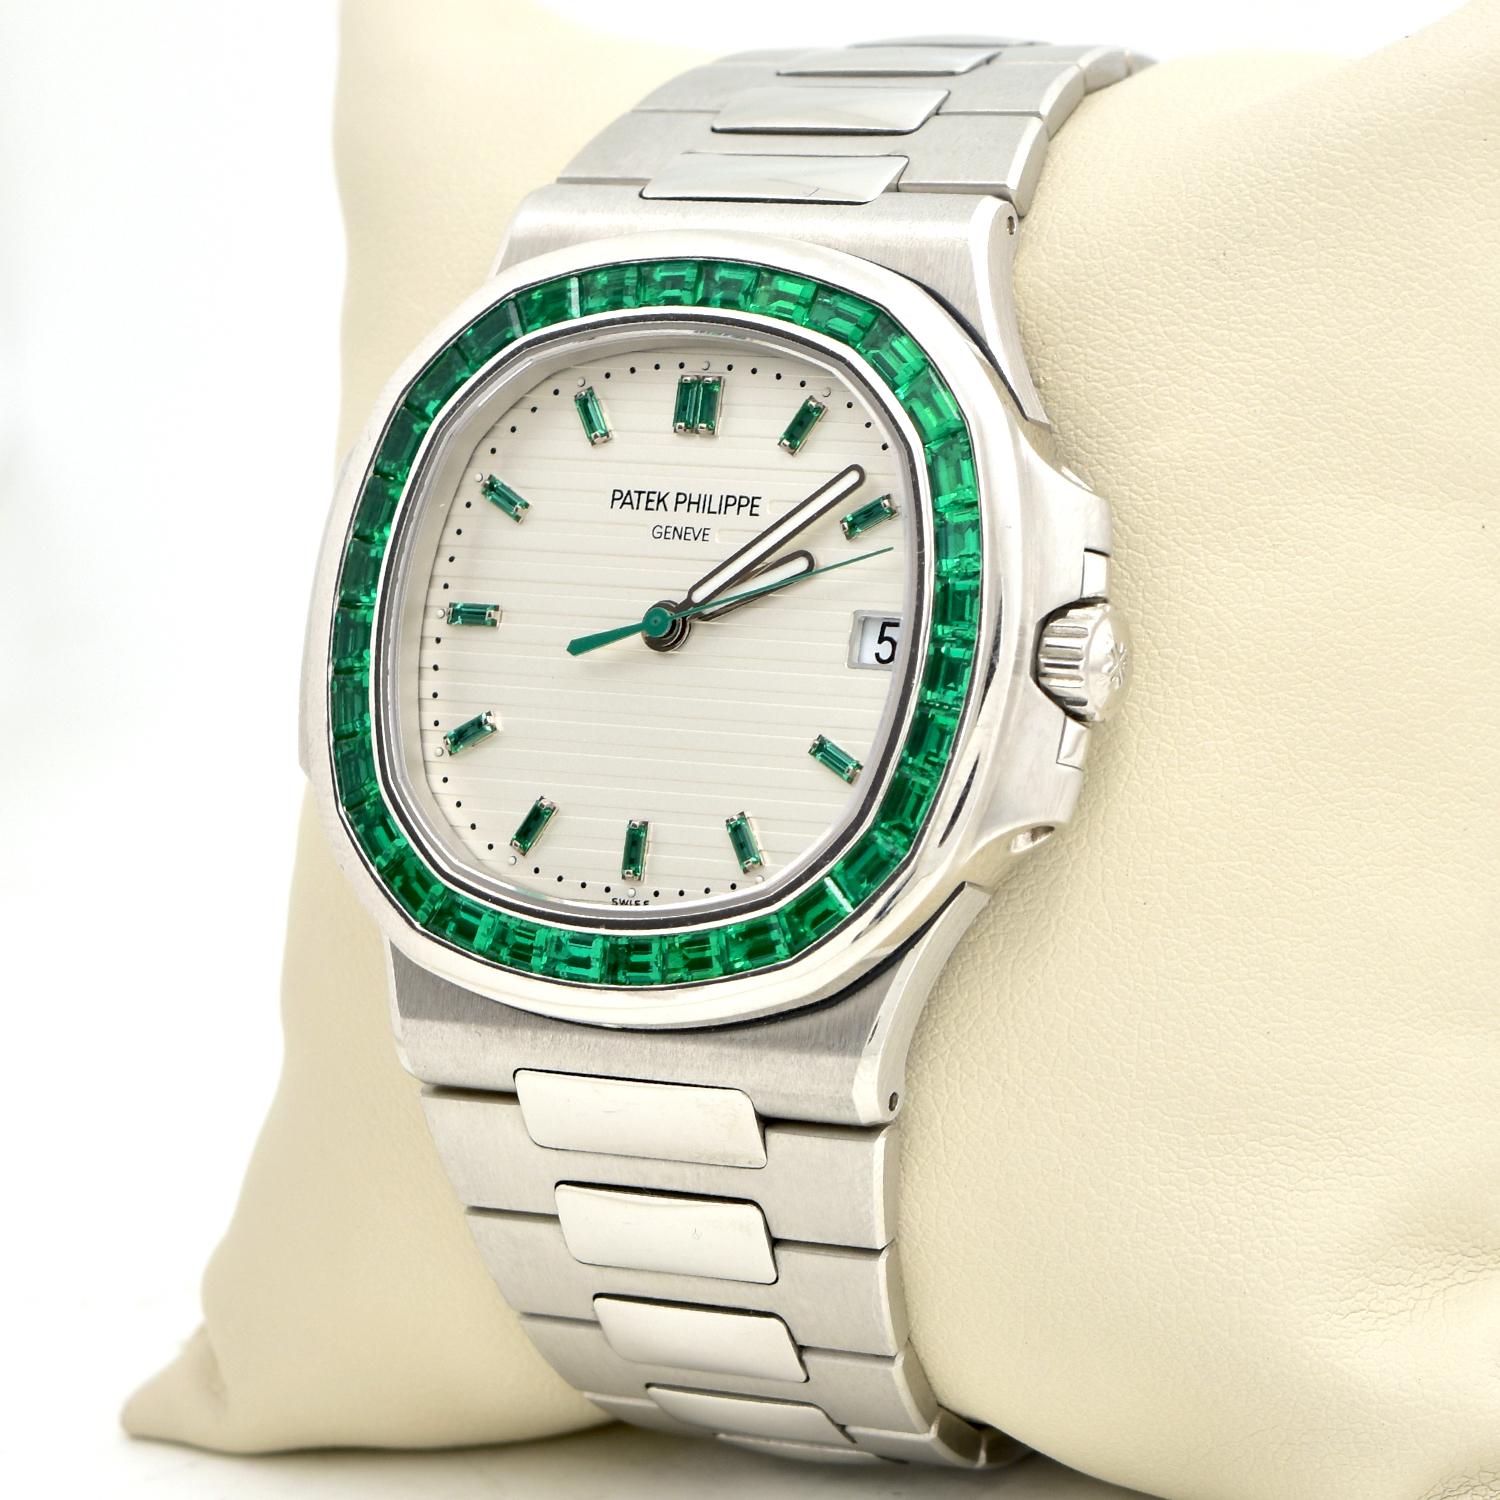 patek philippe green emerald price